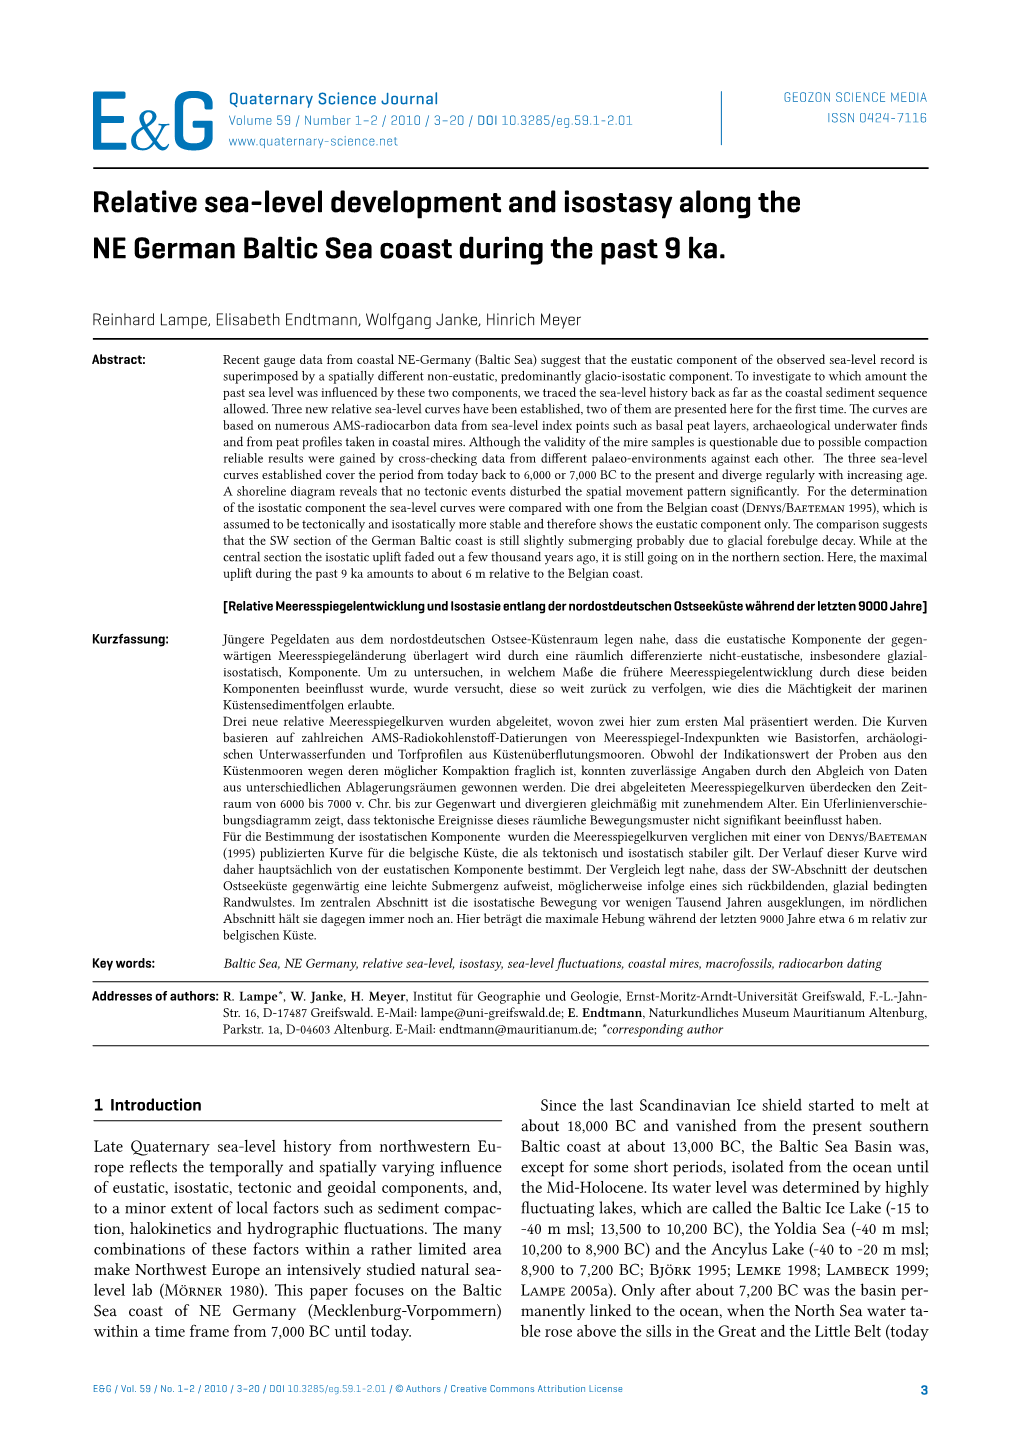 Relative Sea-Level Development and Isostasy Along the NE German Baltic Sea Coast During the Past 9 Ka